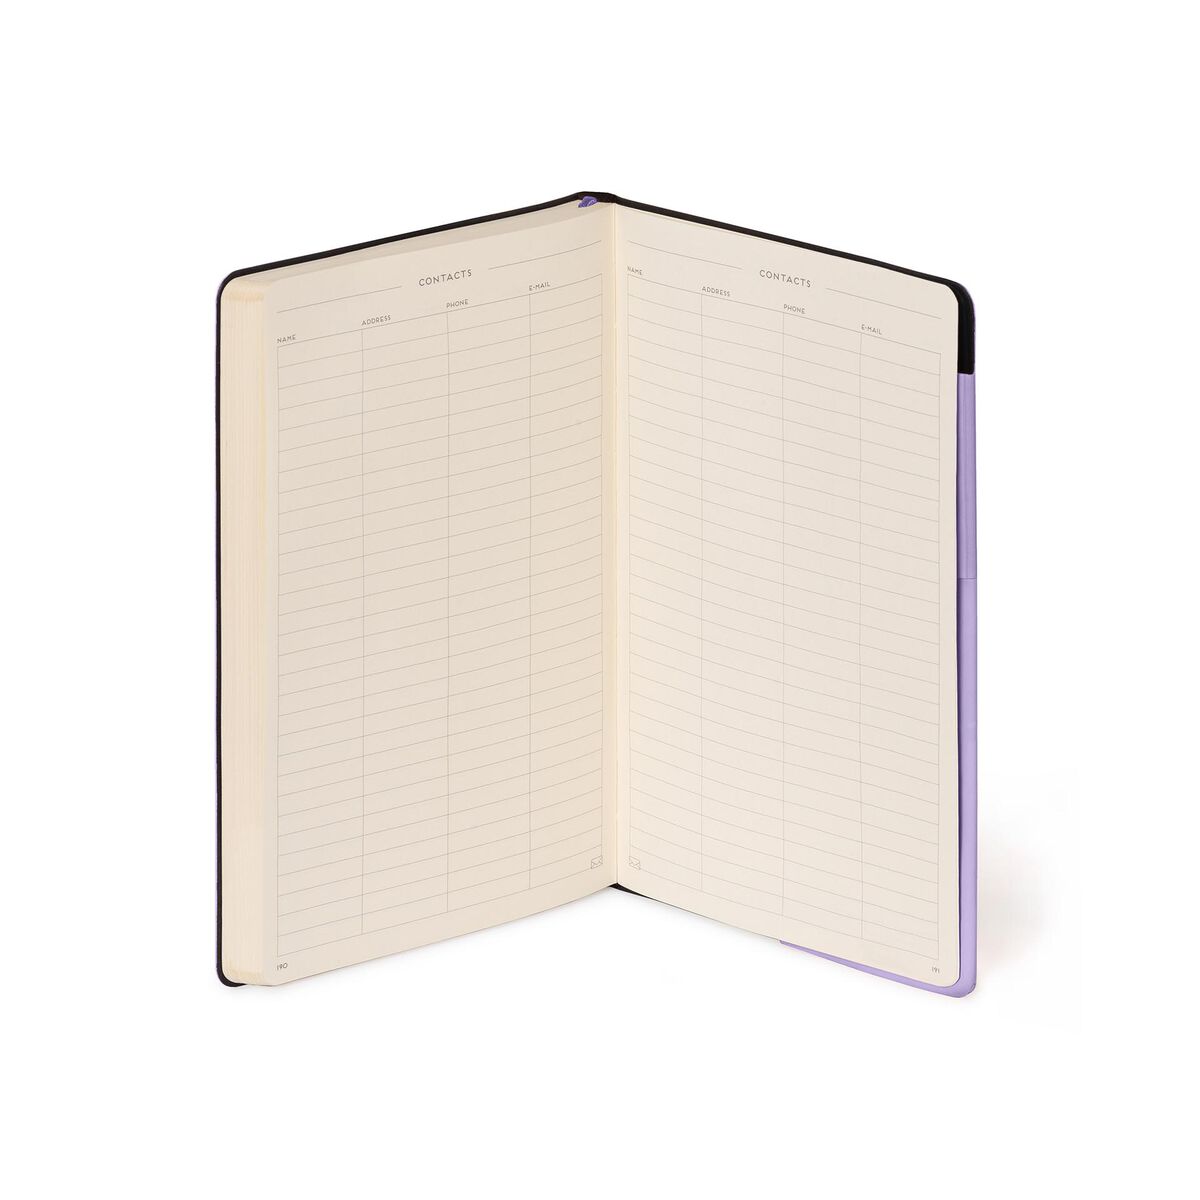 Kariertes Notizbuch - Medium - My Notebook, , zoo